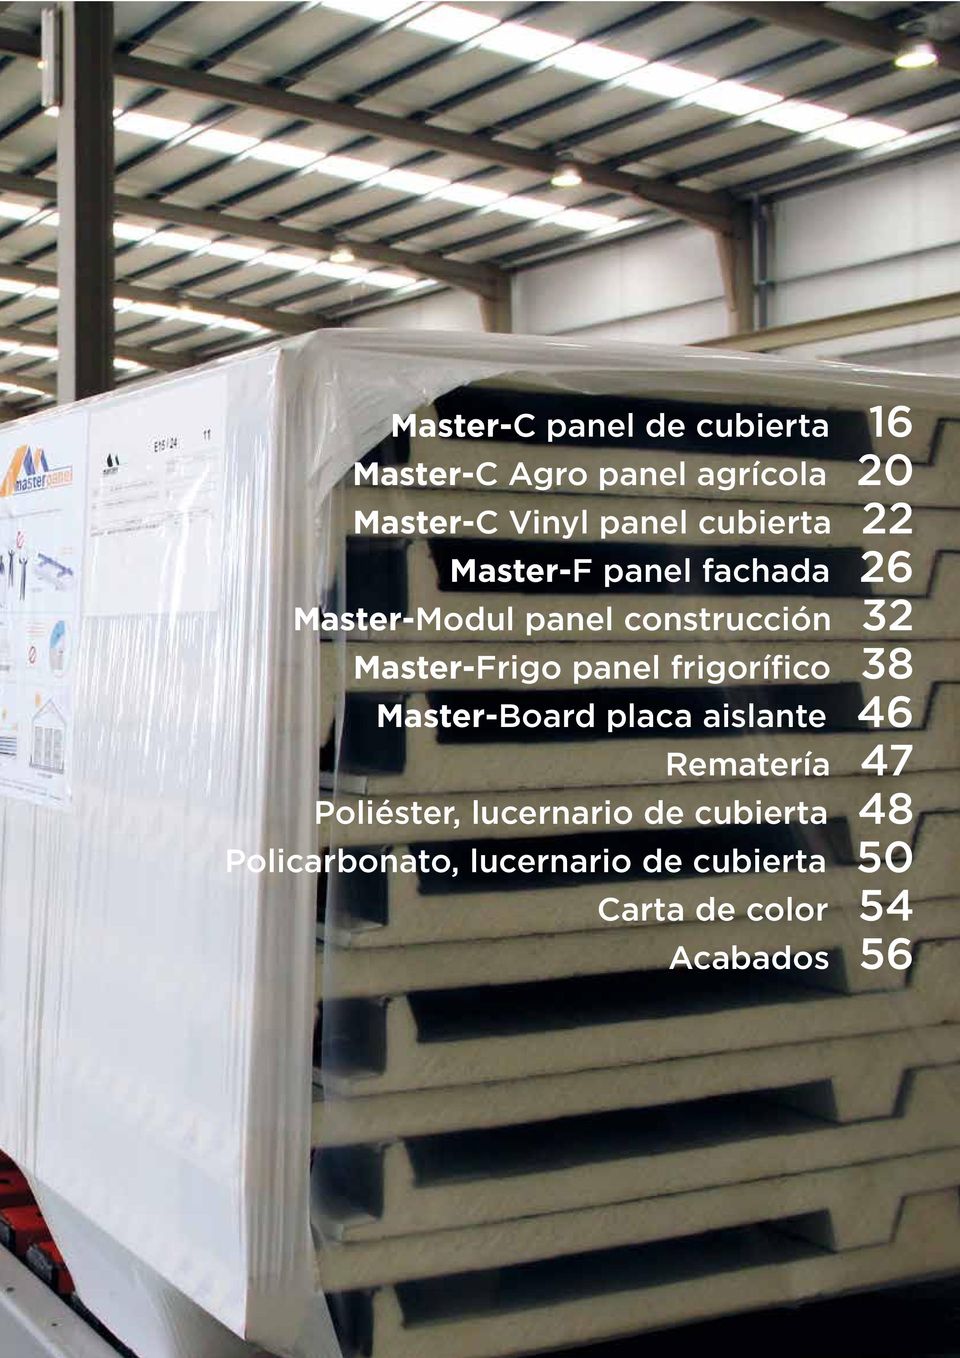 panel frigorífico 38 Master-Board placa aislante 46 Rematería 47 Poliéster,